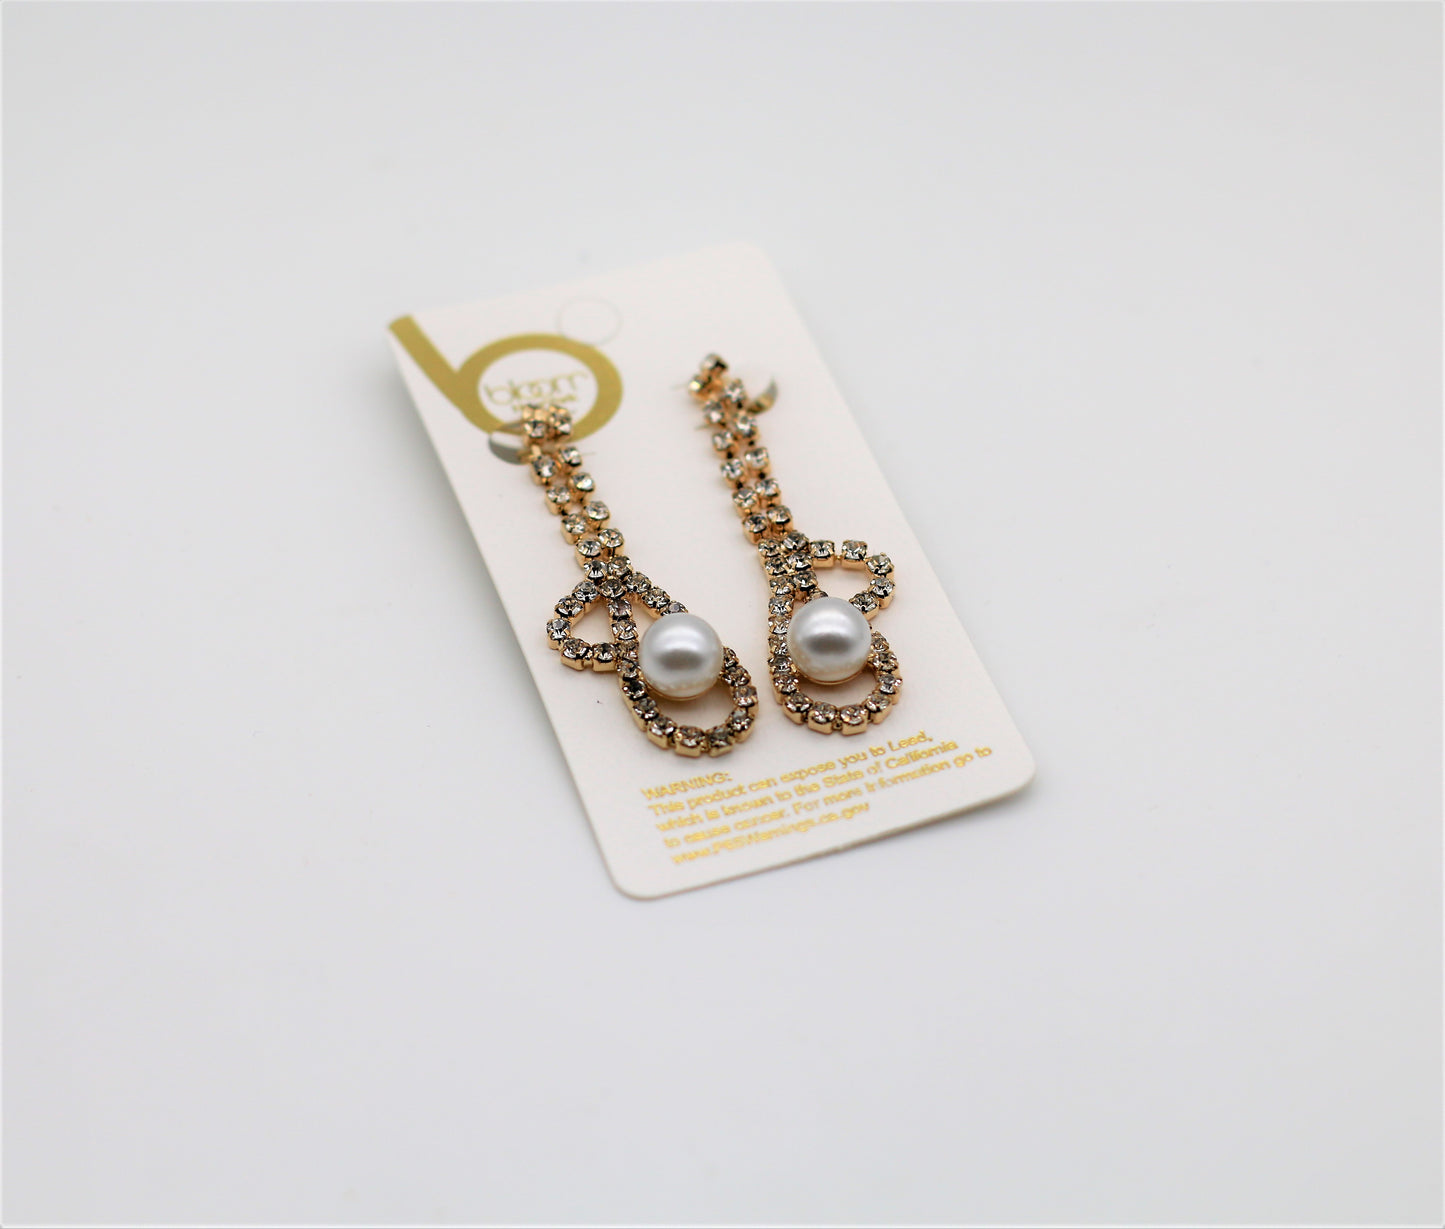 dangling rhinestone earrings with pearl